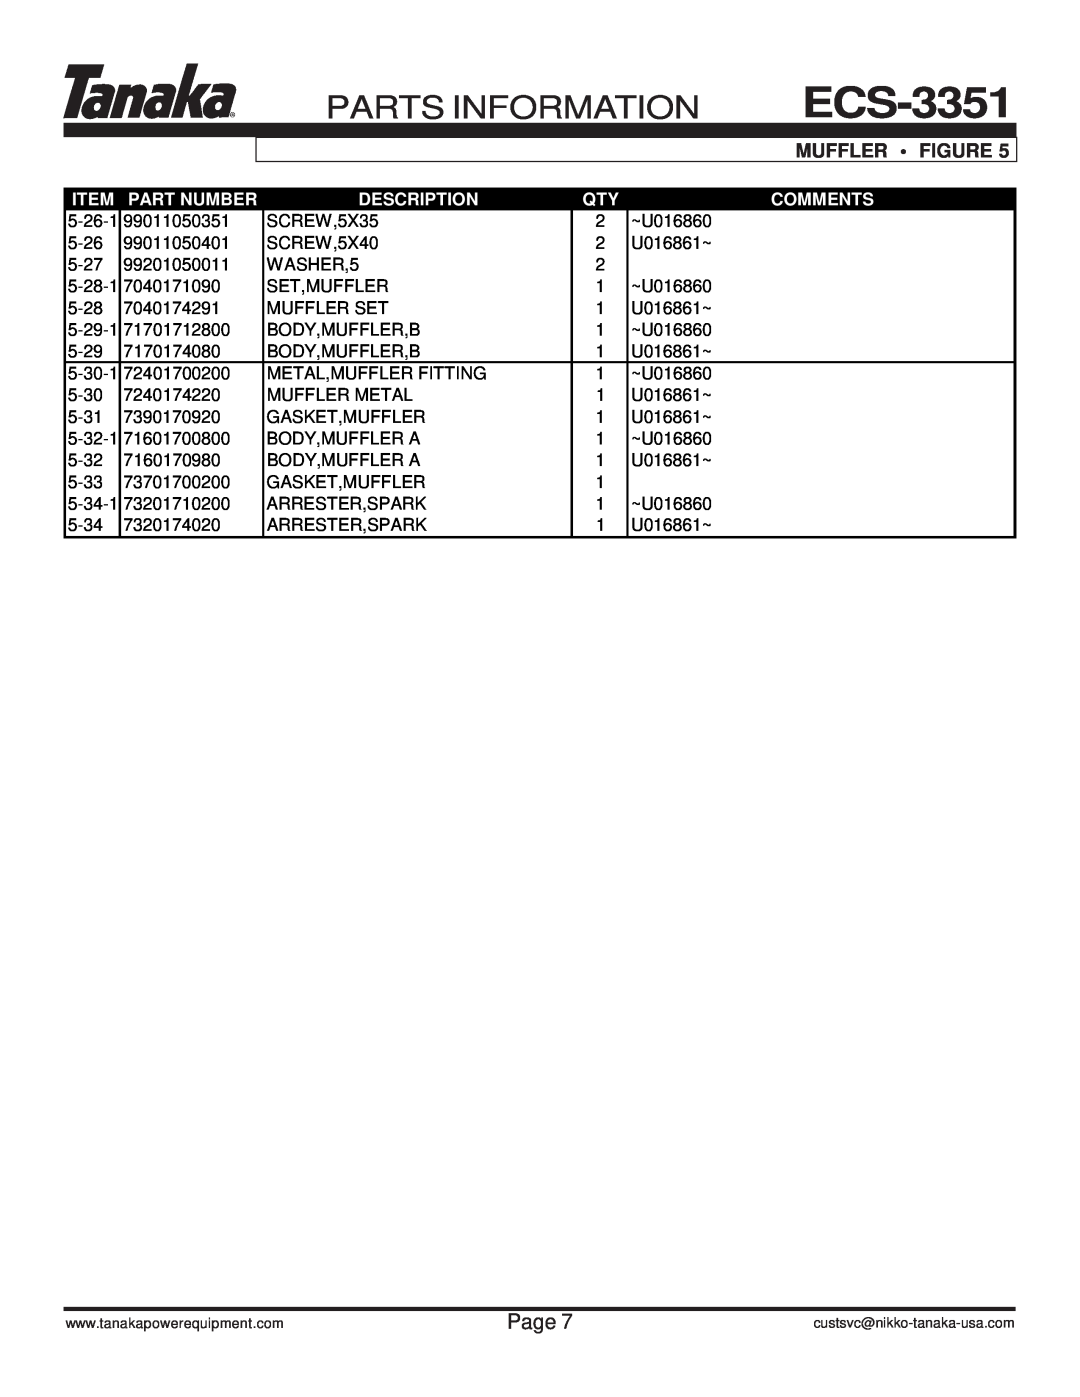 Tanaka ECS-3351/B manual Parts Information, Muffler Figure, Page, Part Number, Description, Comments 